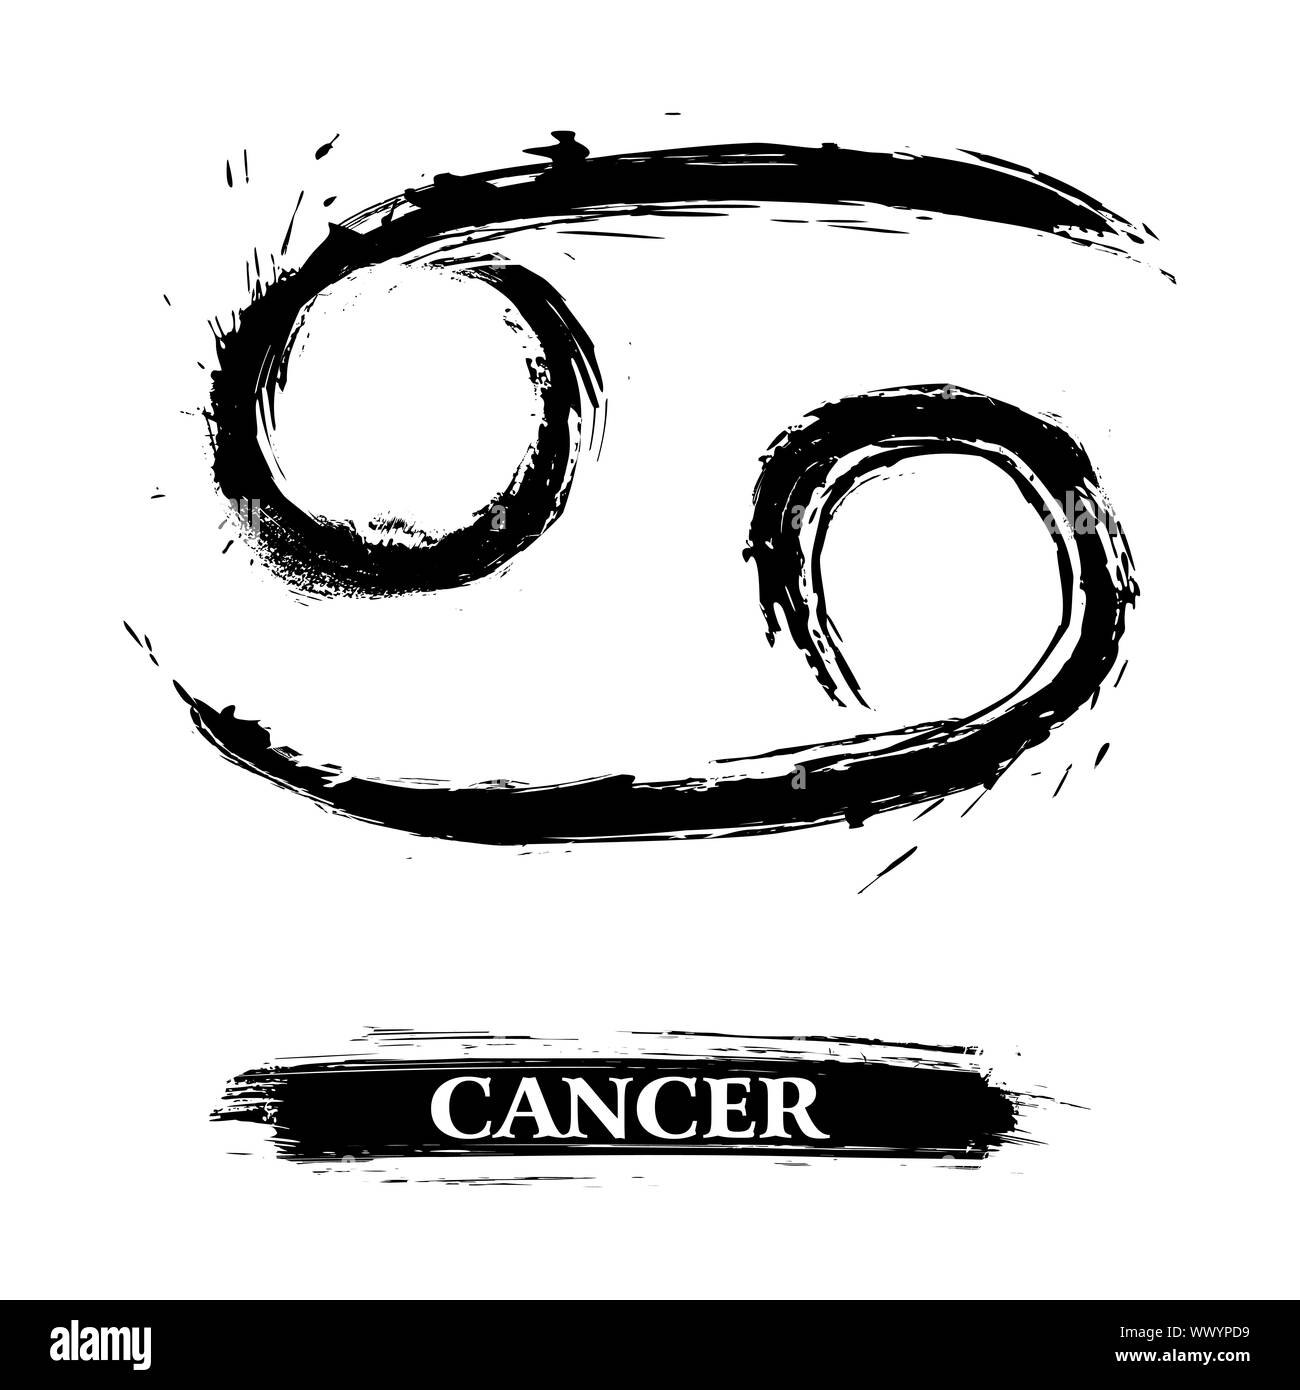 Cancer symbol Stock Photo